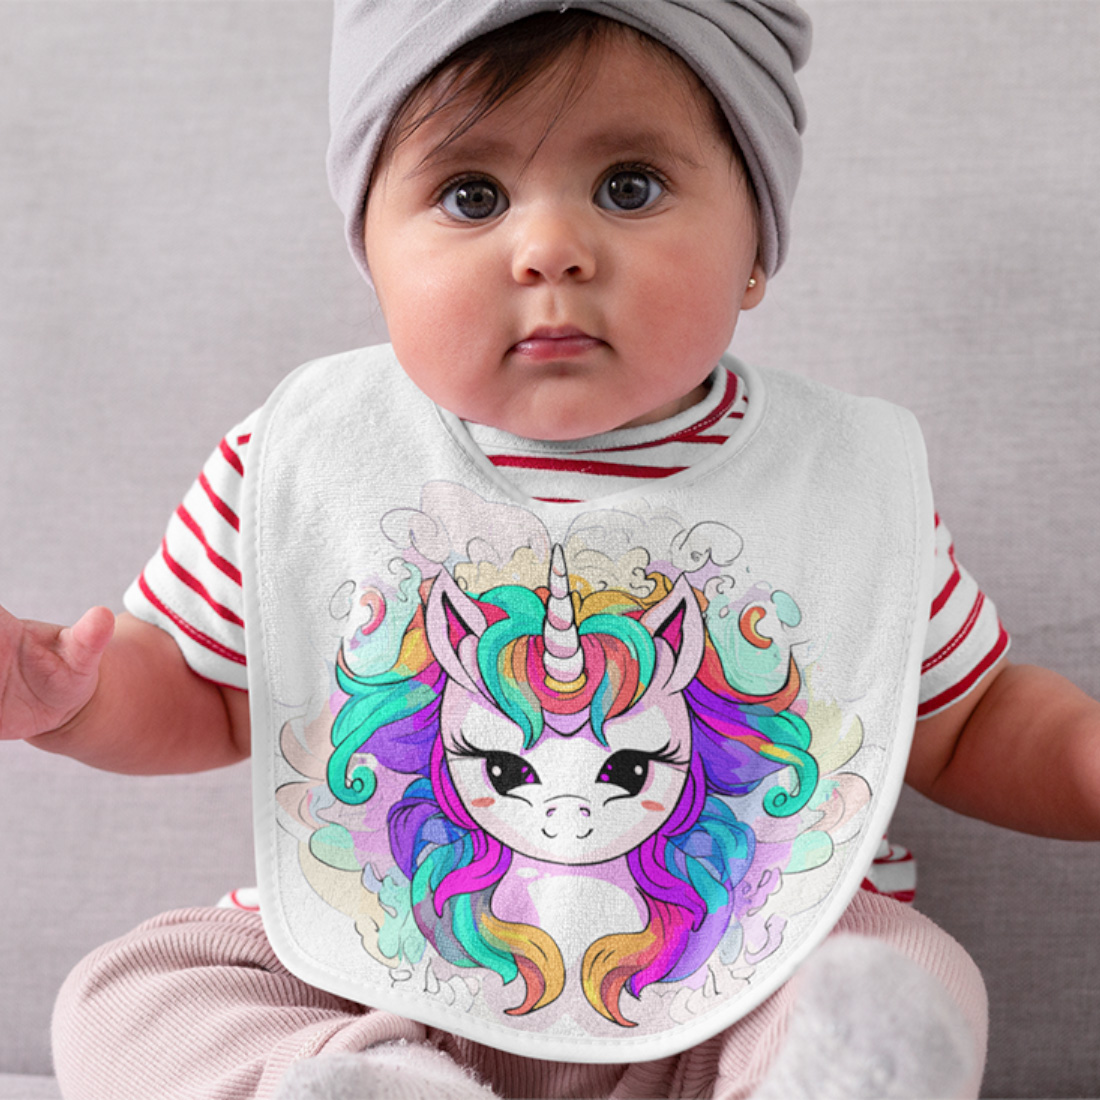 Baby Unicorn Magic preview image.